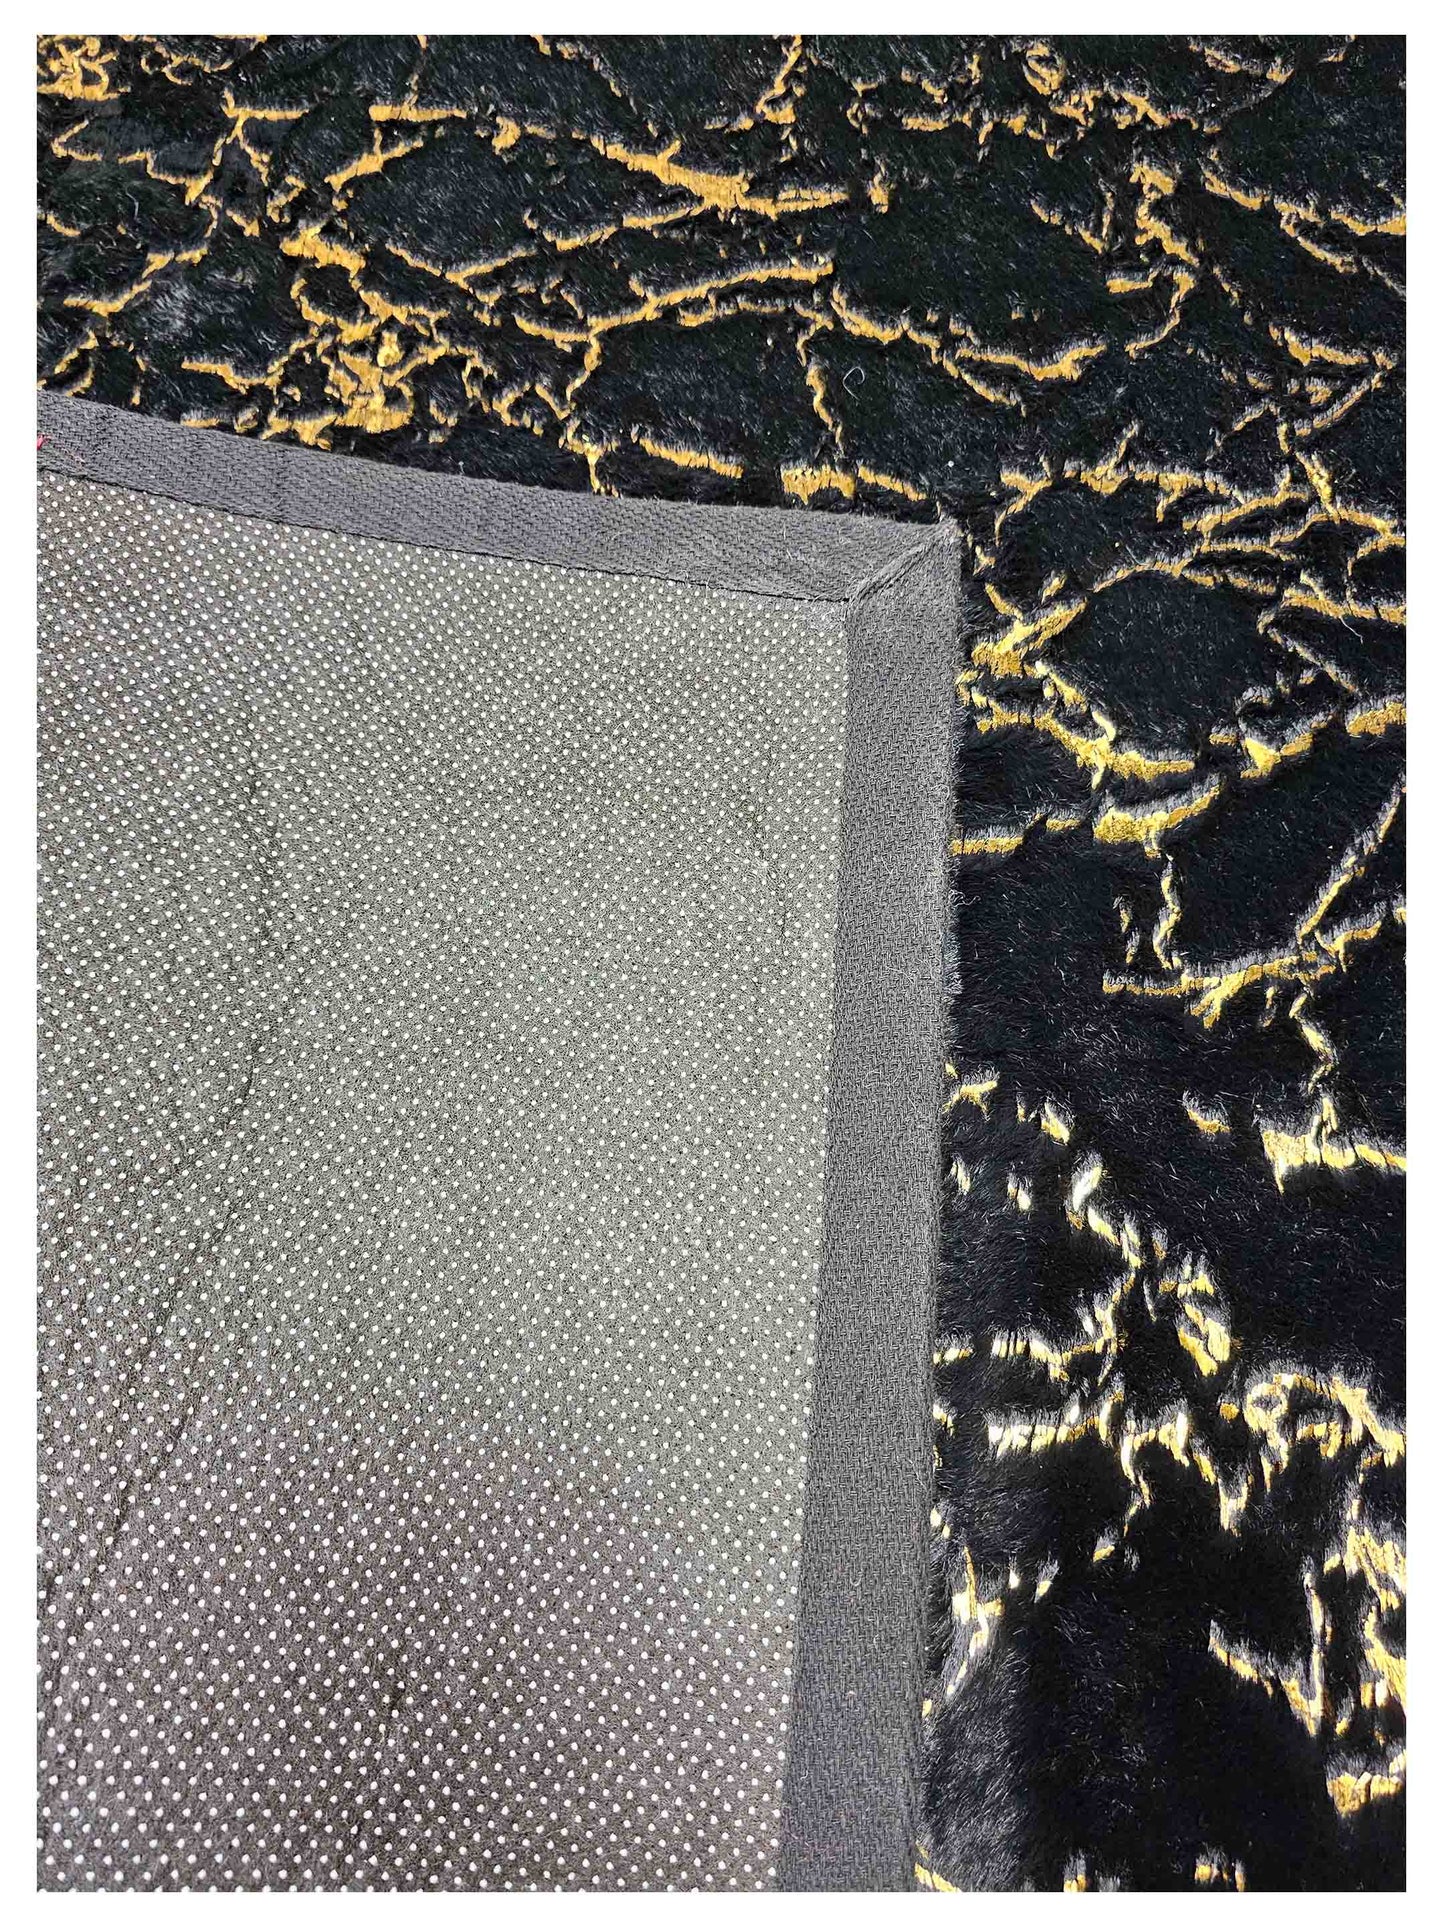 American Cover Design Fur Rabbit  Fur Foil Black Gold Modern Machinemade Rug